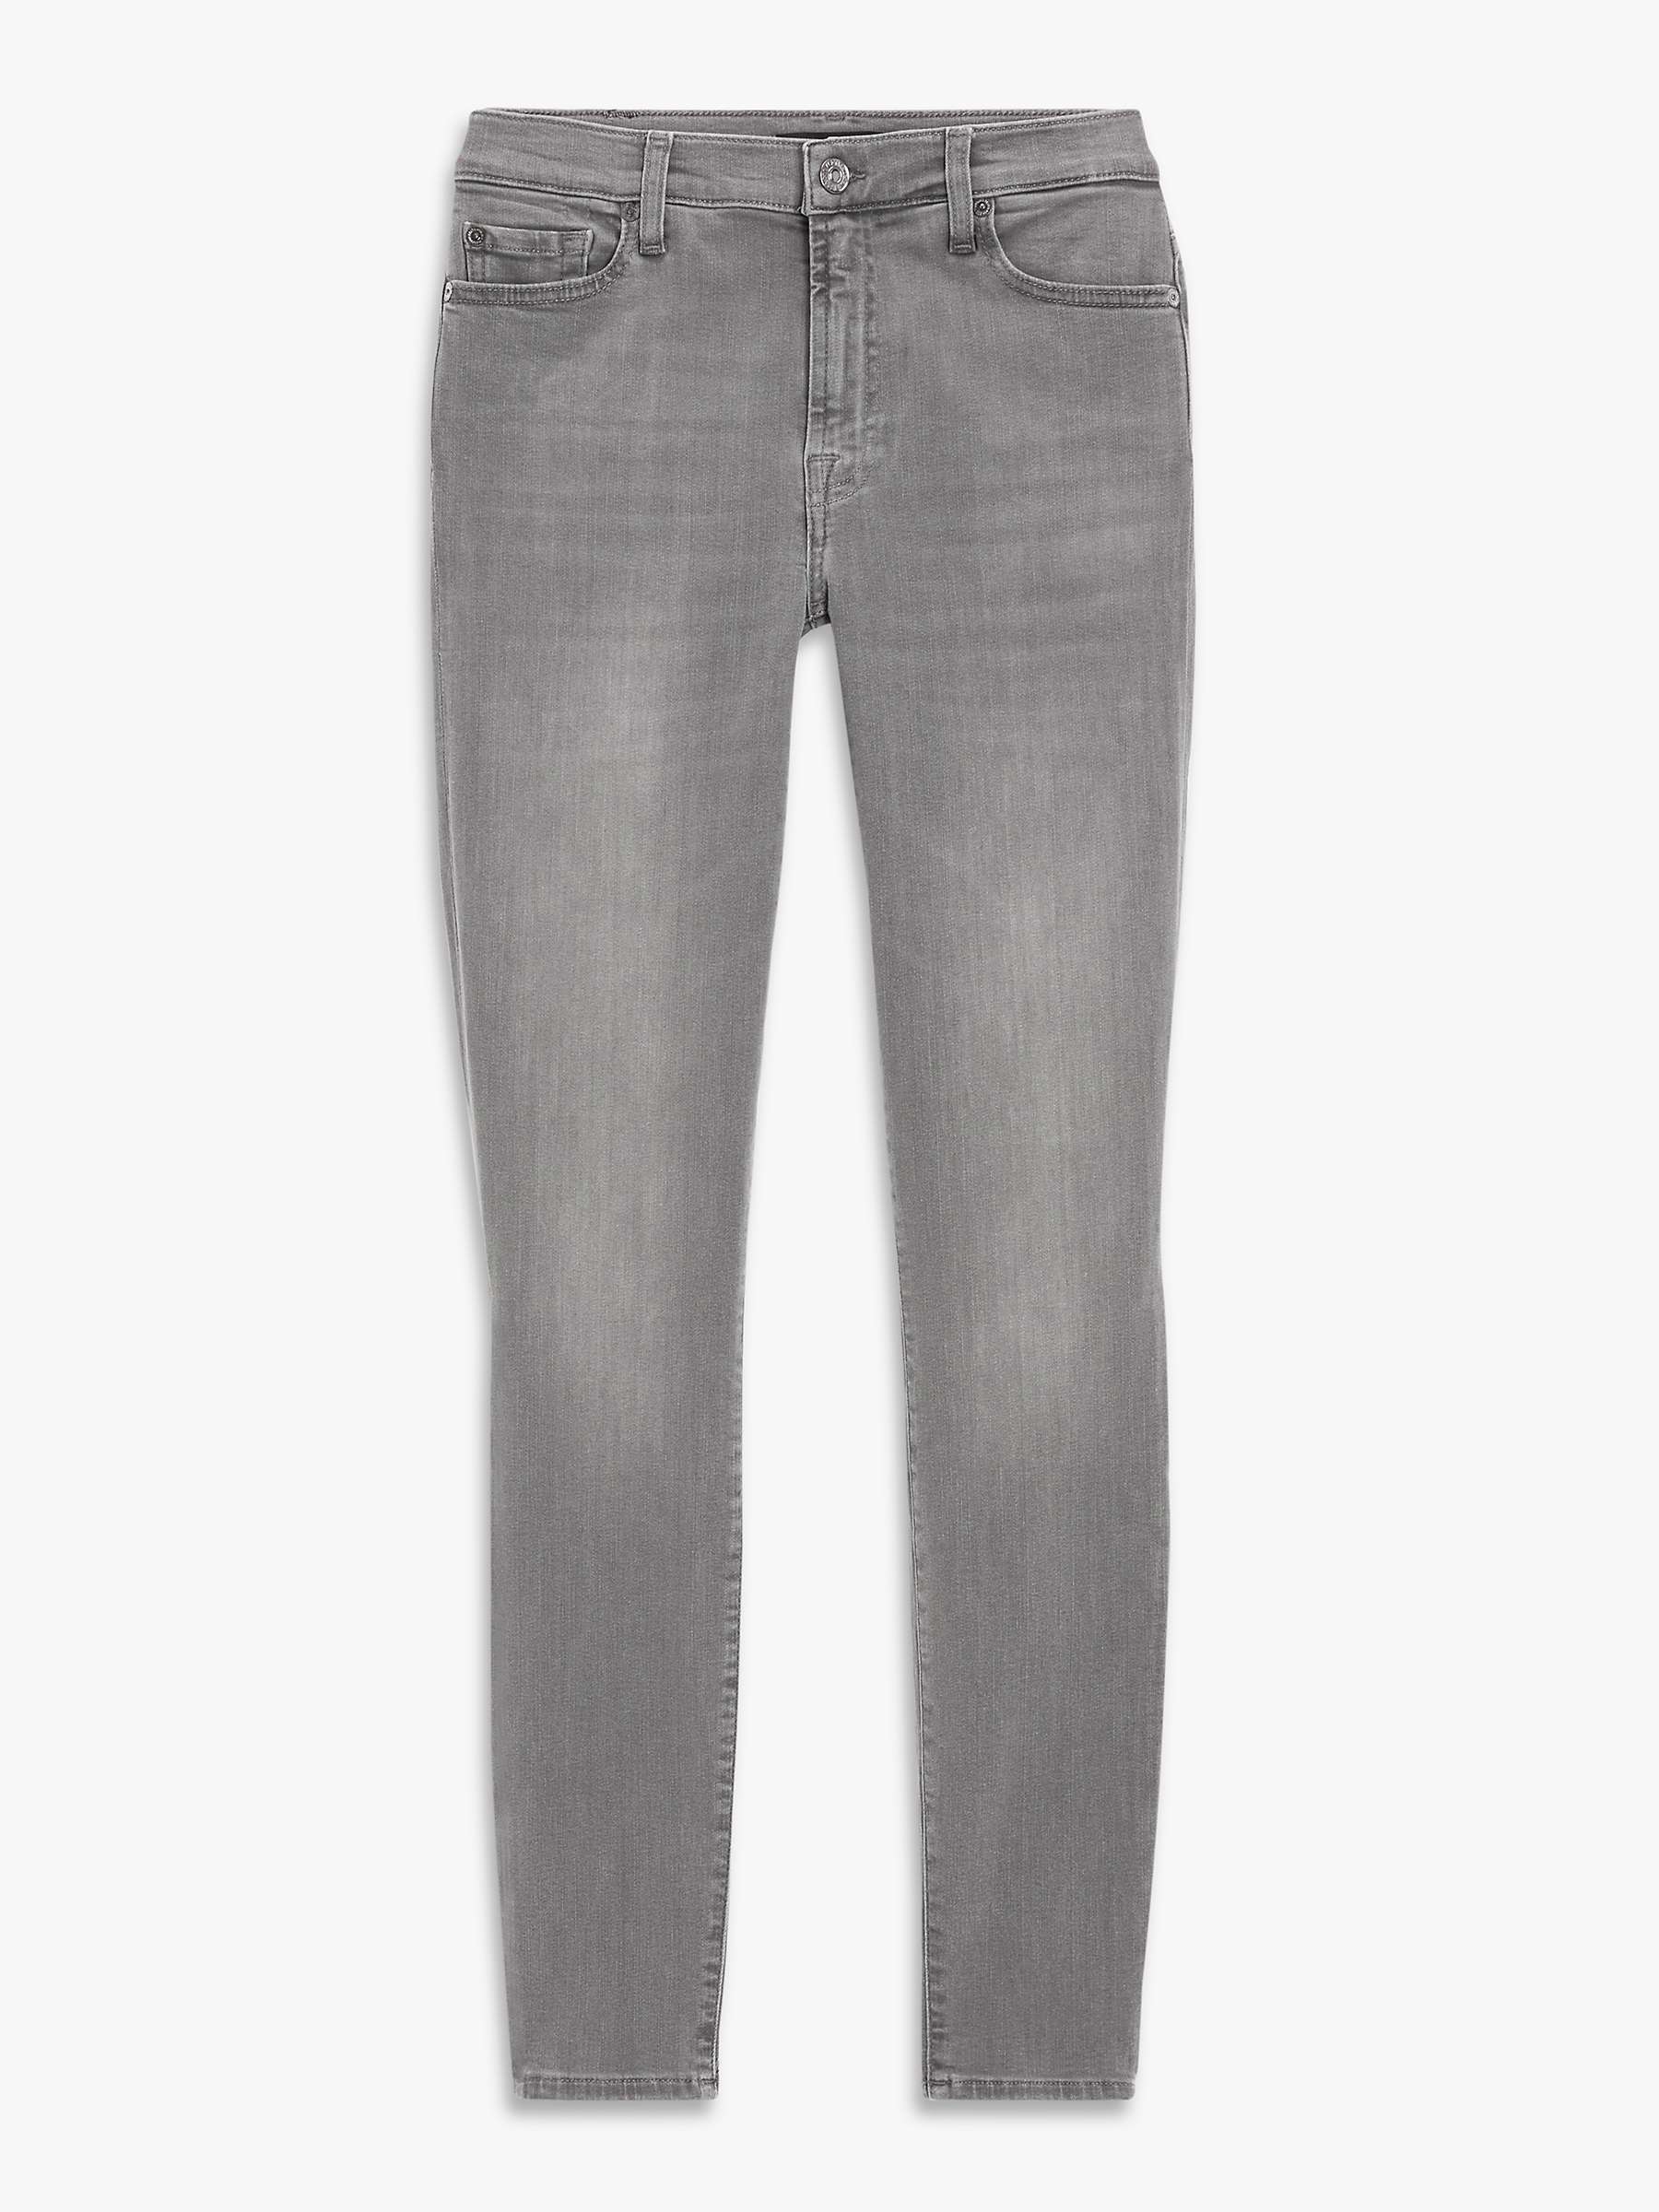 Buy 7 For All Mankind Skinny Slim Fit Jeans, Grey Online at johnlewis.com